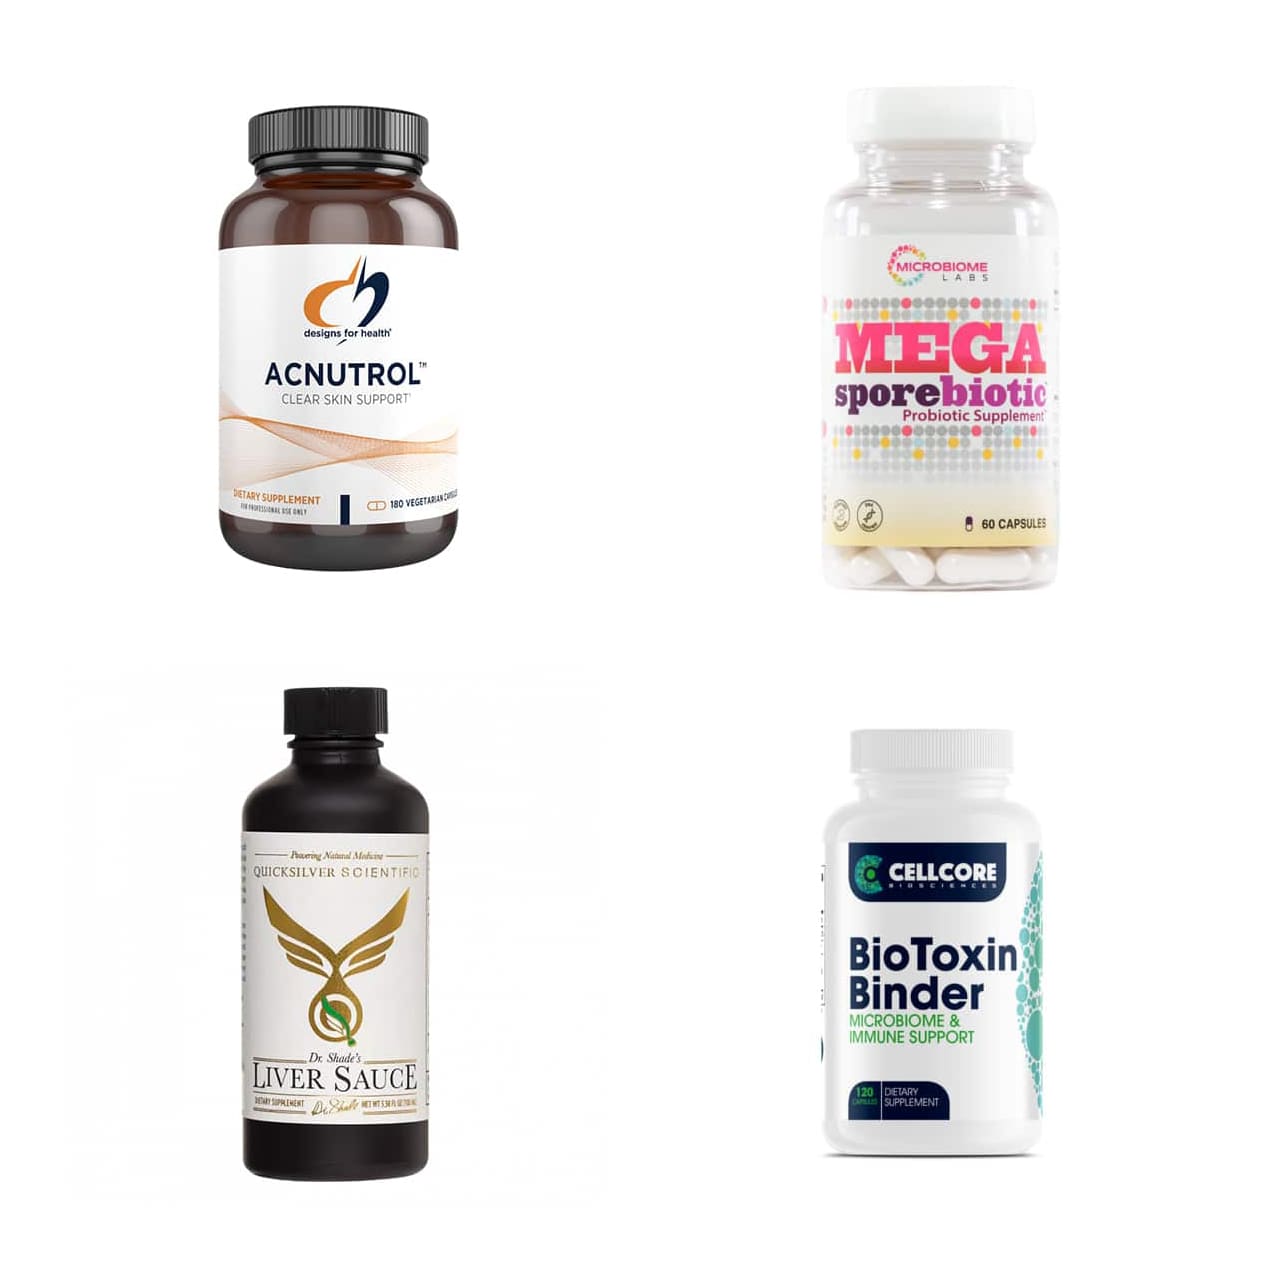 Skin Package - Acnutrol, MegaSporeBiotic, Liver Sauce, BioToxin Binder